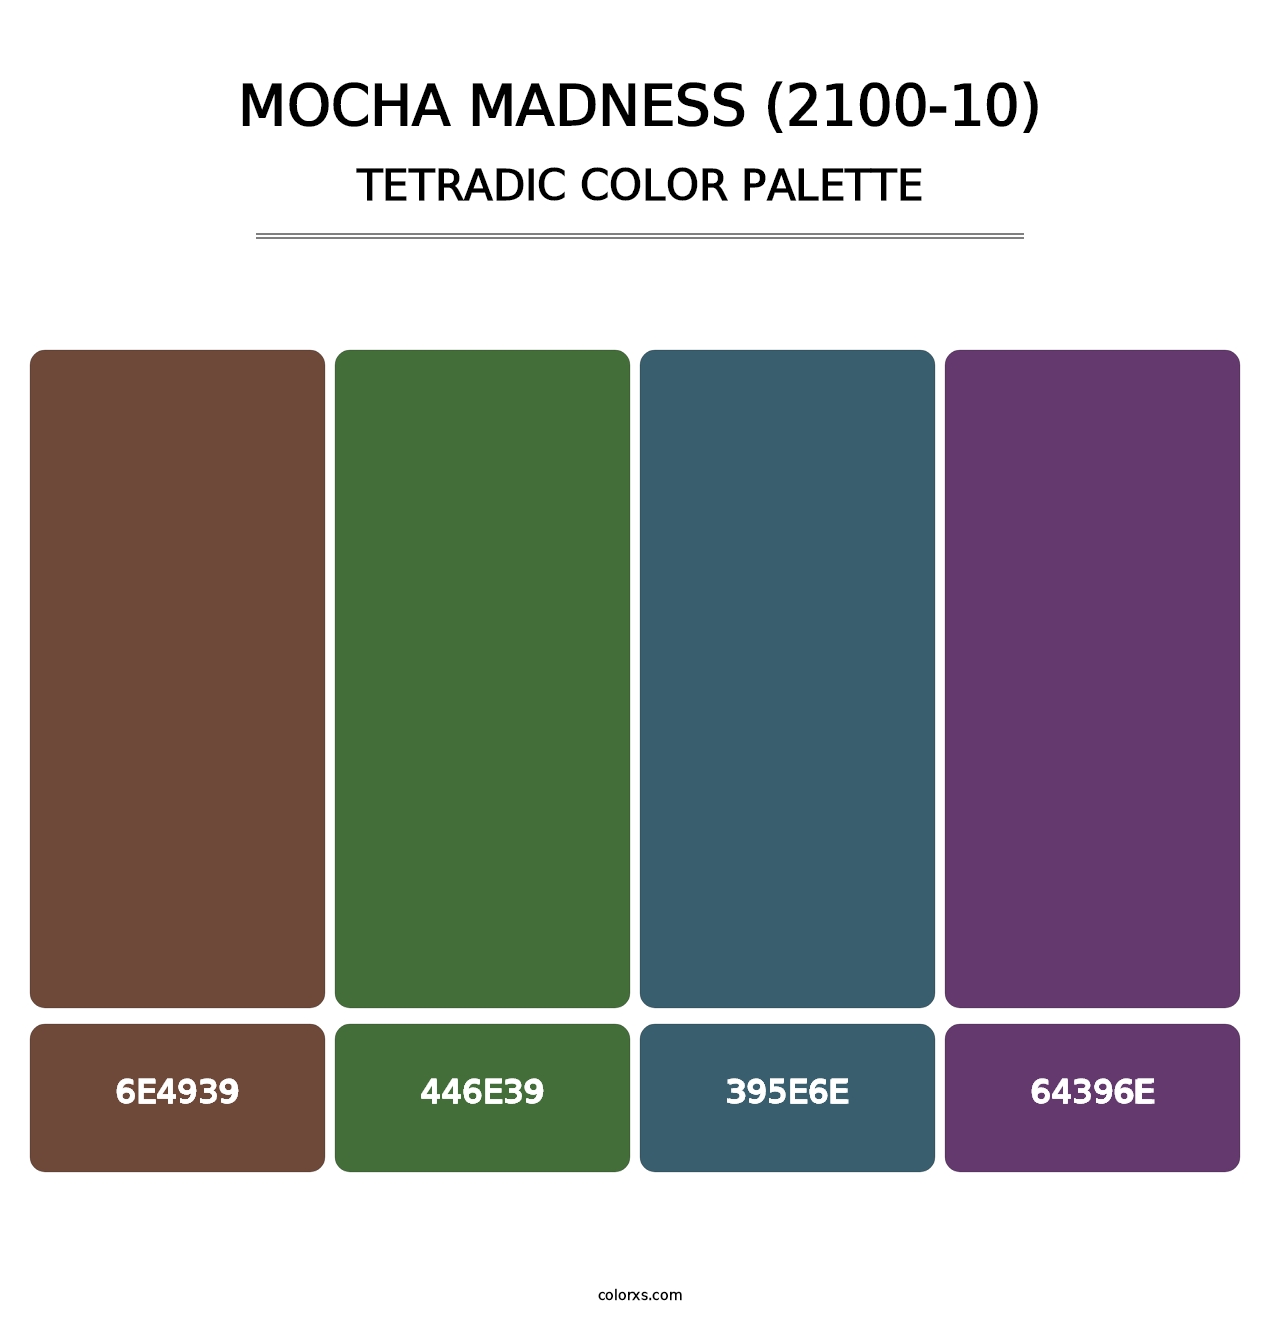 Mocha Madness (2100-10) - Tetradic Color Palette